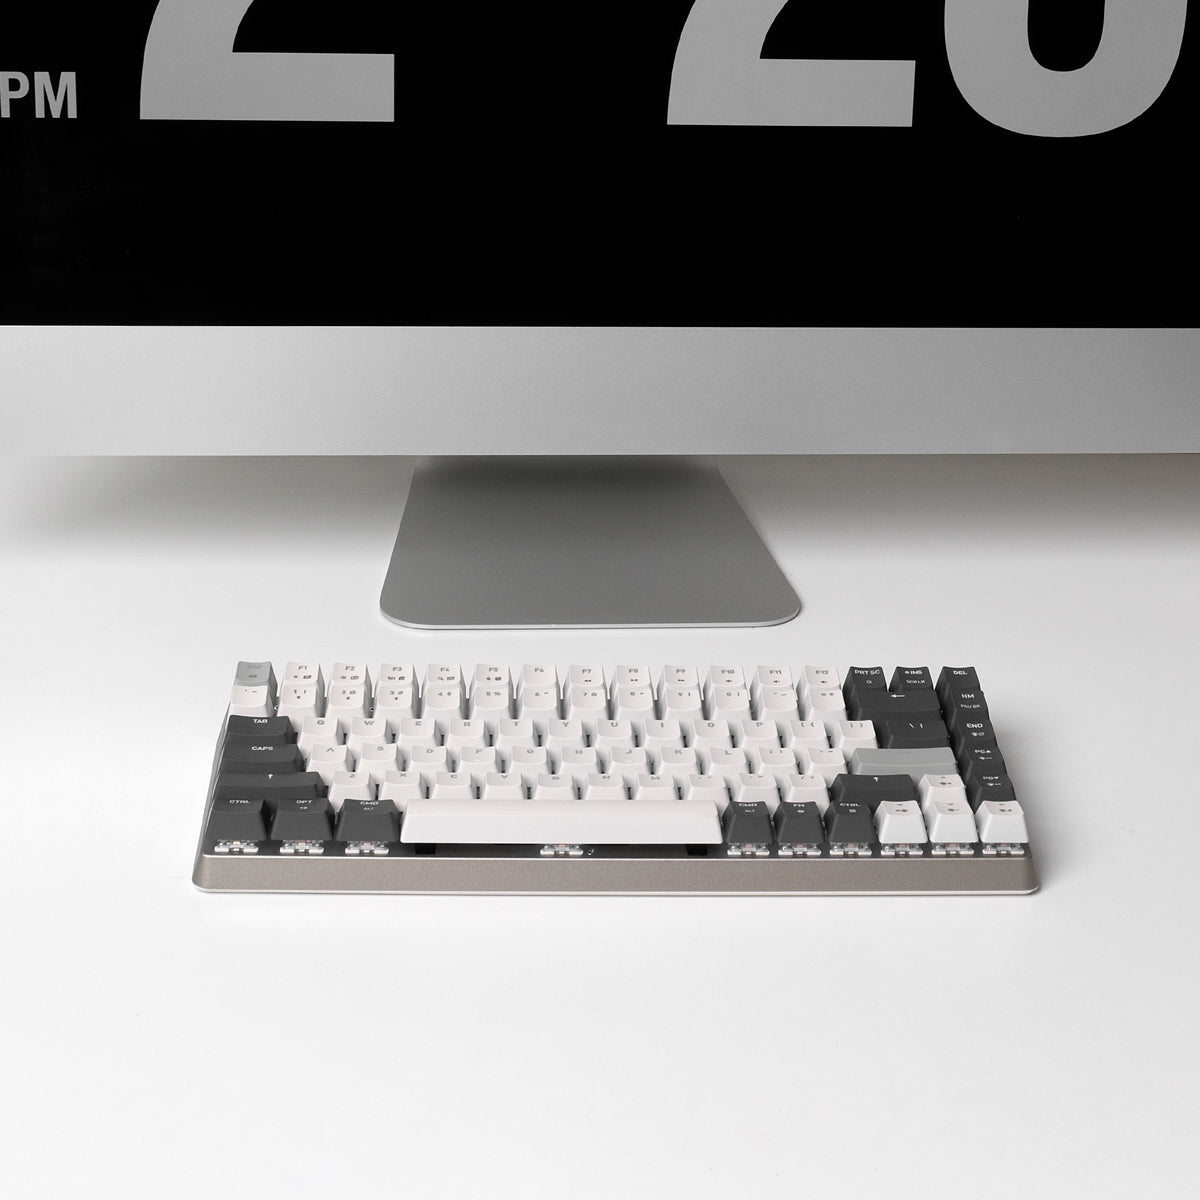 कैस्केड 75% वायरलेस हॉट-स्वैपेबल कीबोर्ड